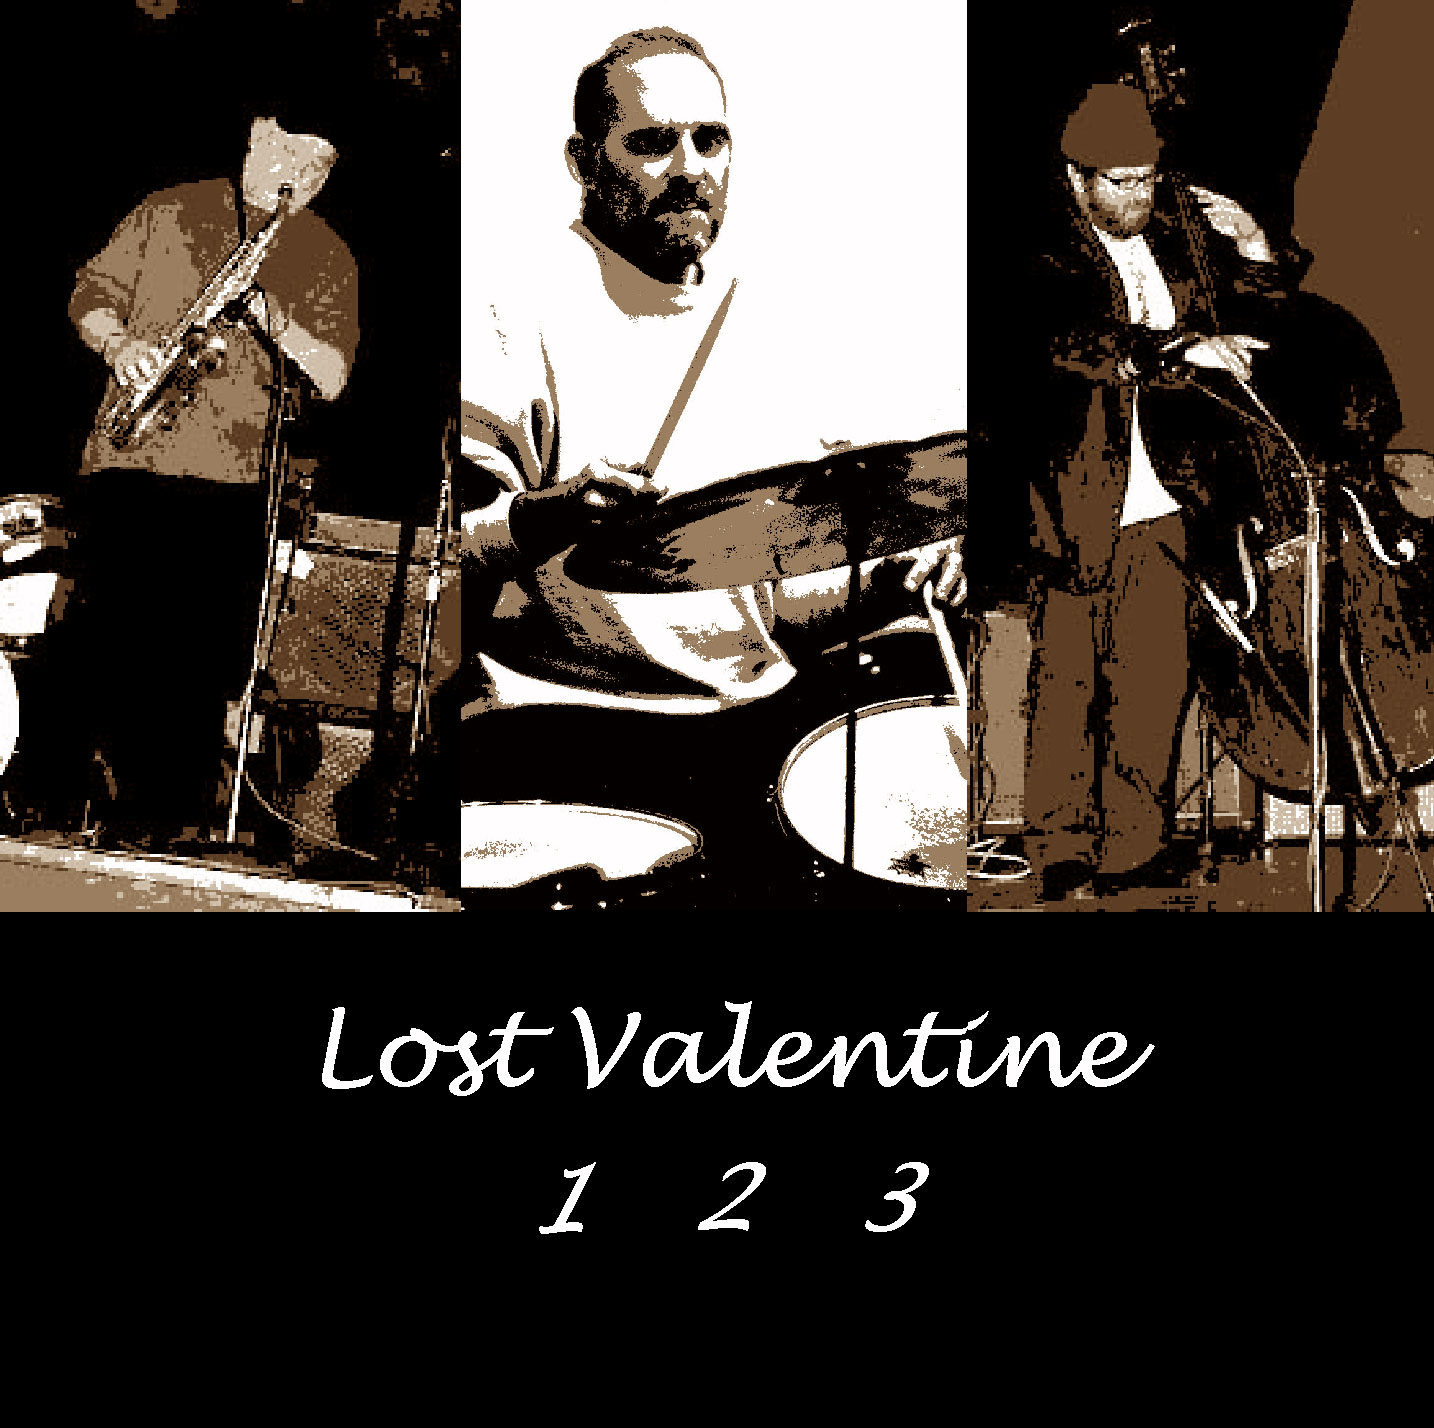 1 2 3 by Lost Valentine